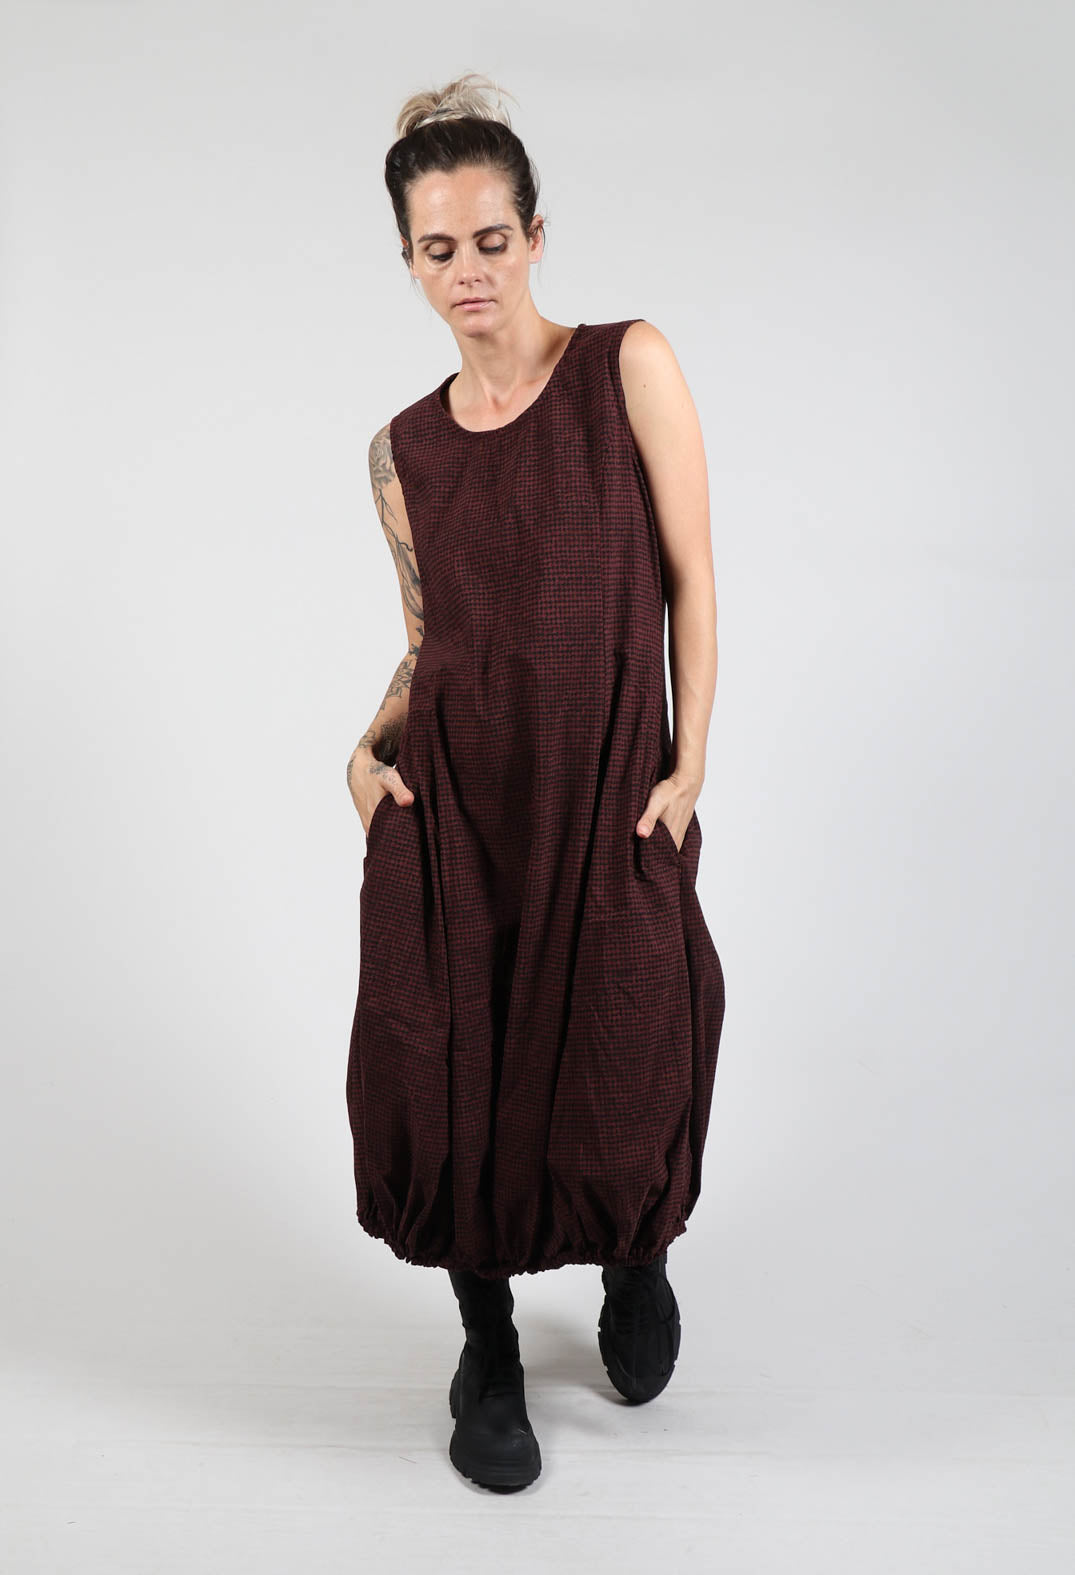 Sleeveless Dress with Gathered Hem in Wood Print